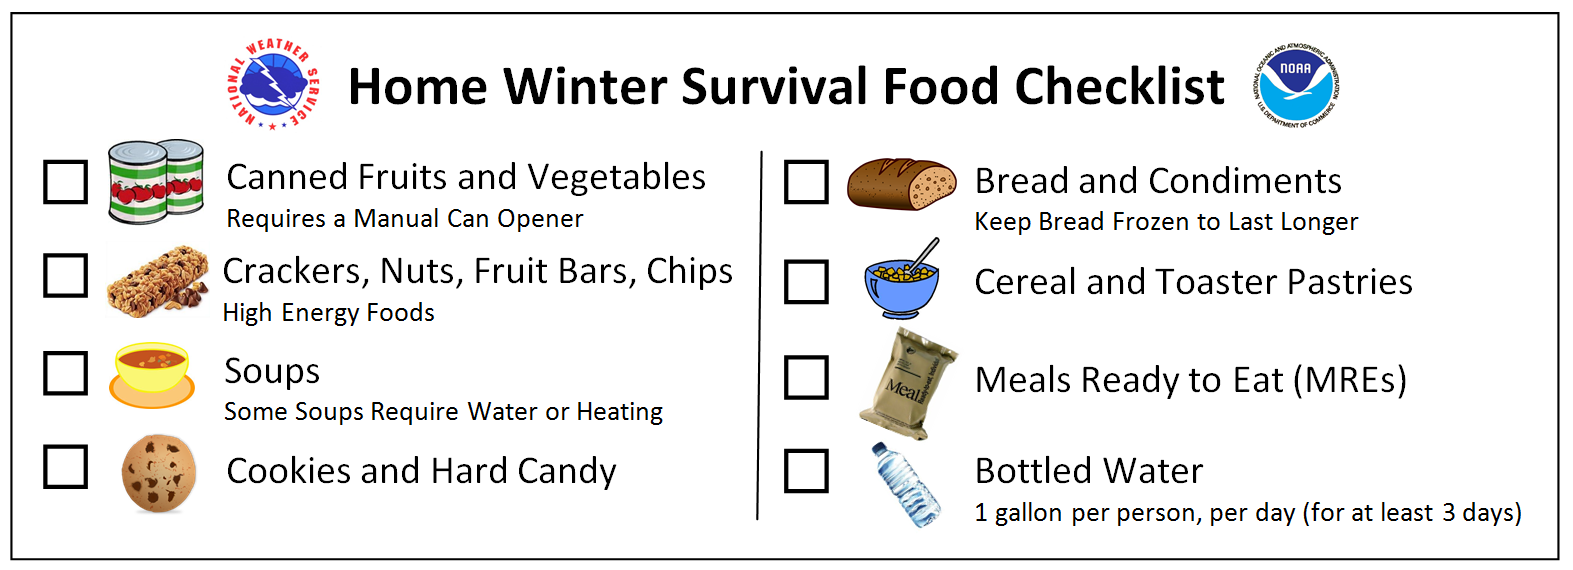 Food Checklist